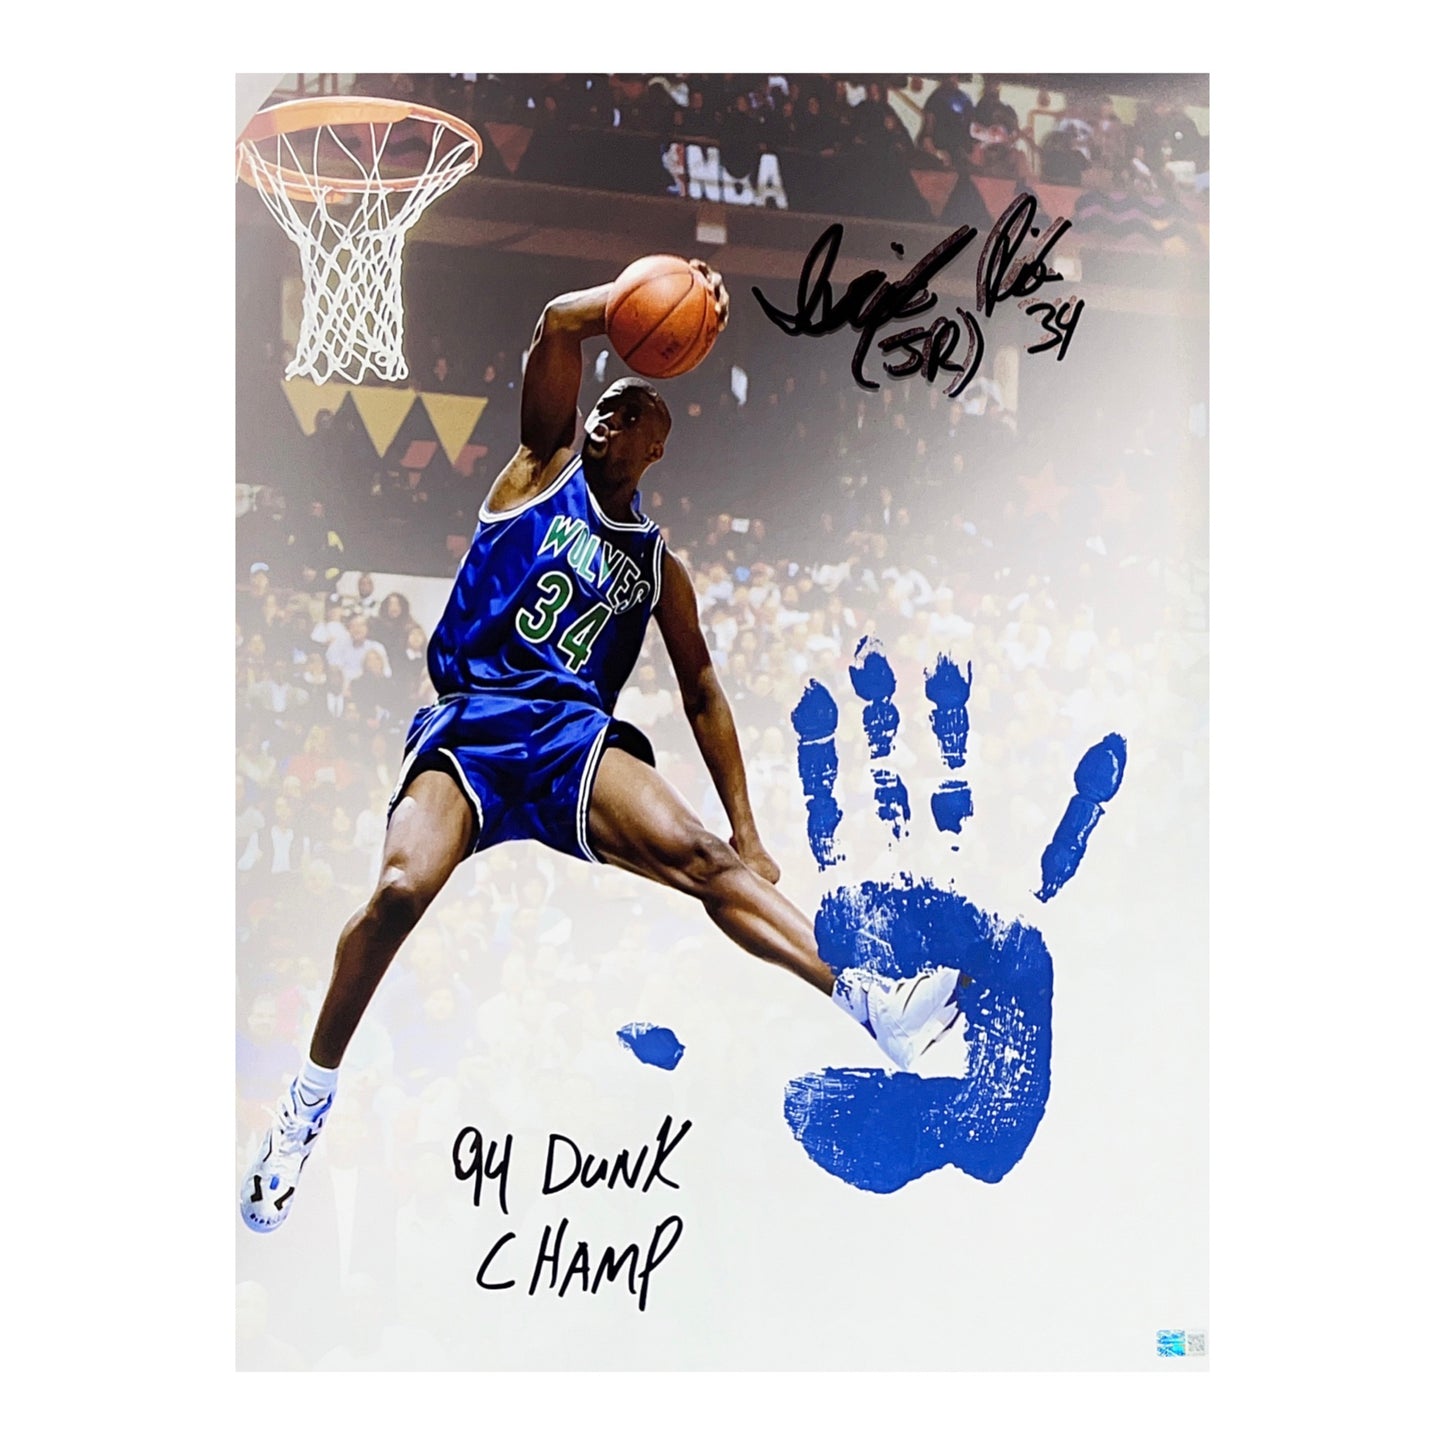 Isaiah “JR” Rider Autographed Minnesota Timberwolves Dunk Contest 16x20 w/ Handprint “94 Dunk Champ” Inscription Steiner CX